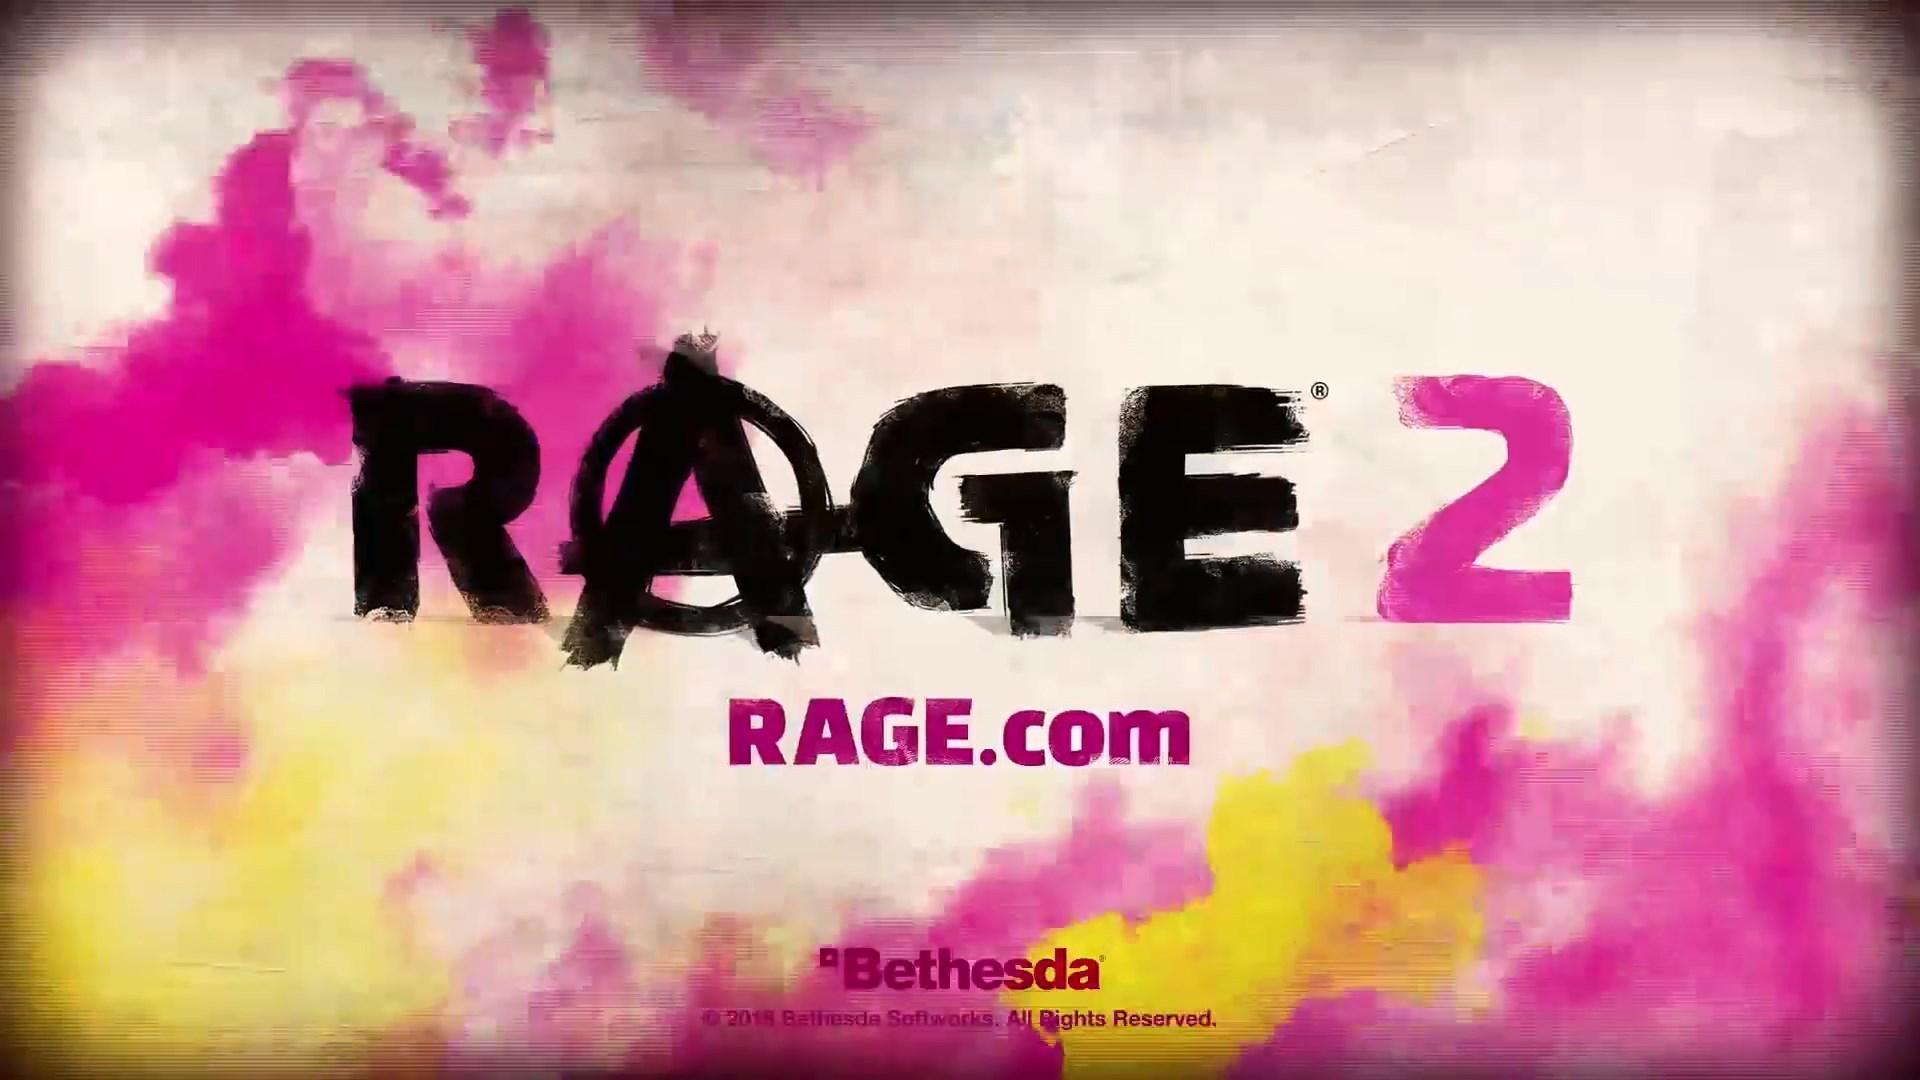 E3 Bethesda Announcement: Rage 2